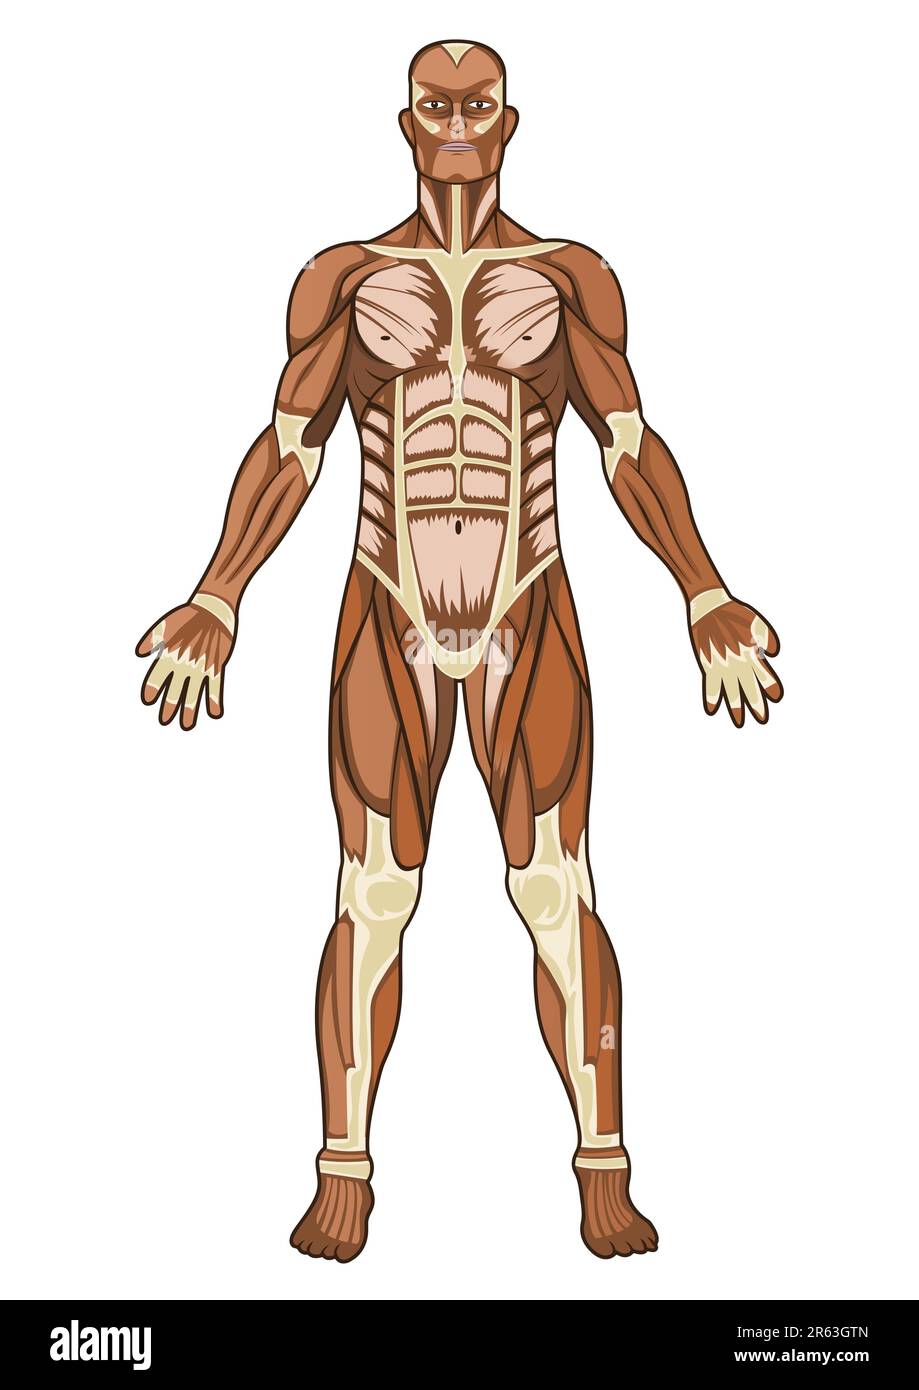 Human anatomy medical concept illustration in vector Stock Vector